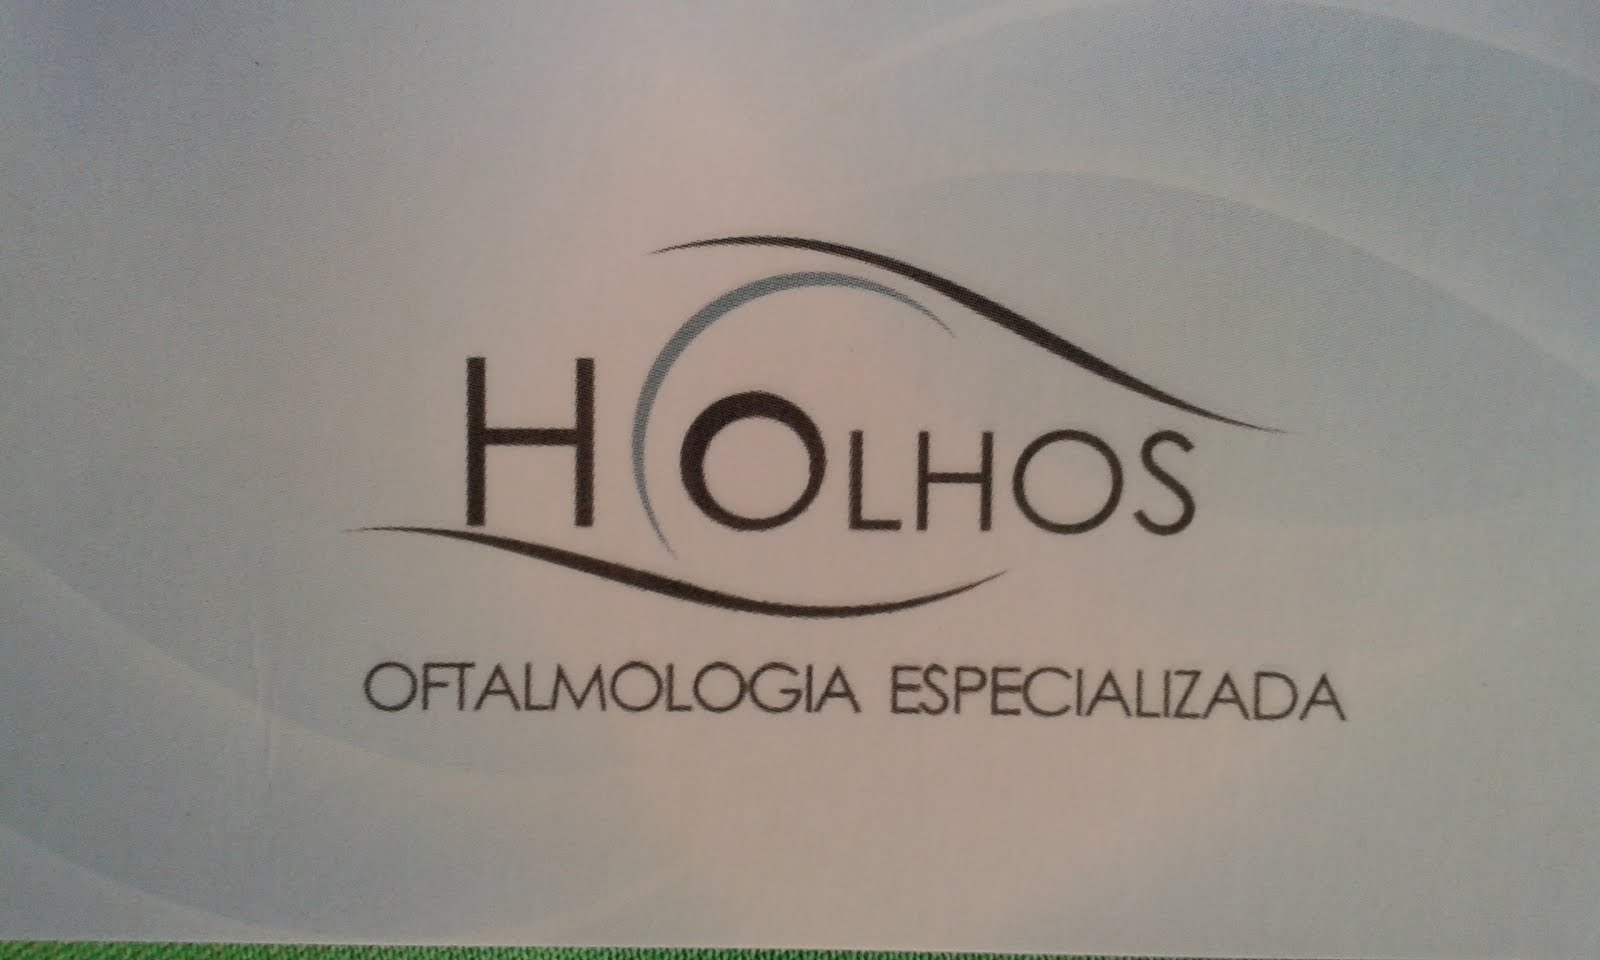 H Olhos! Oftalmologia especializada